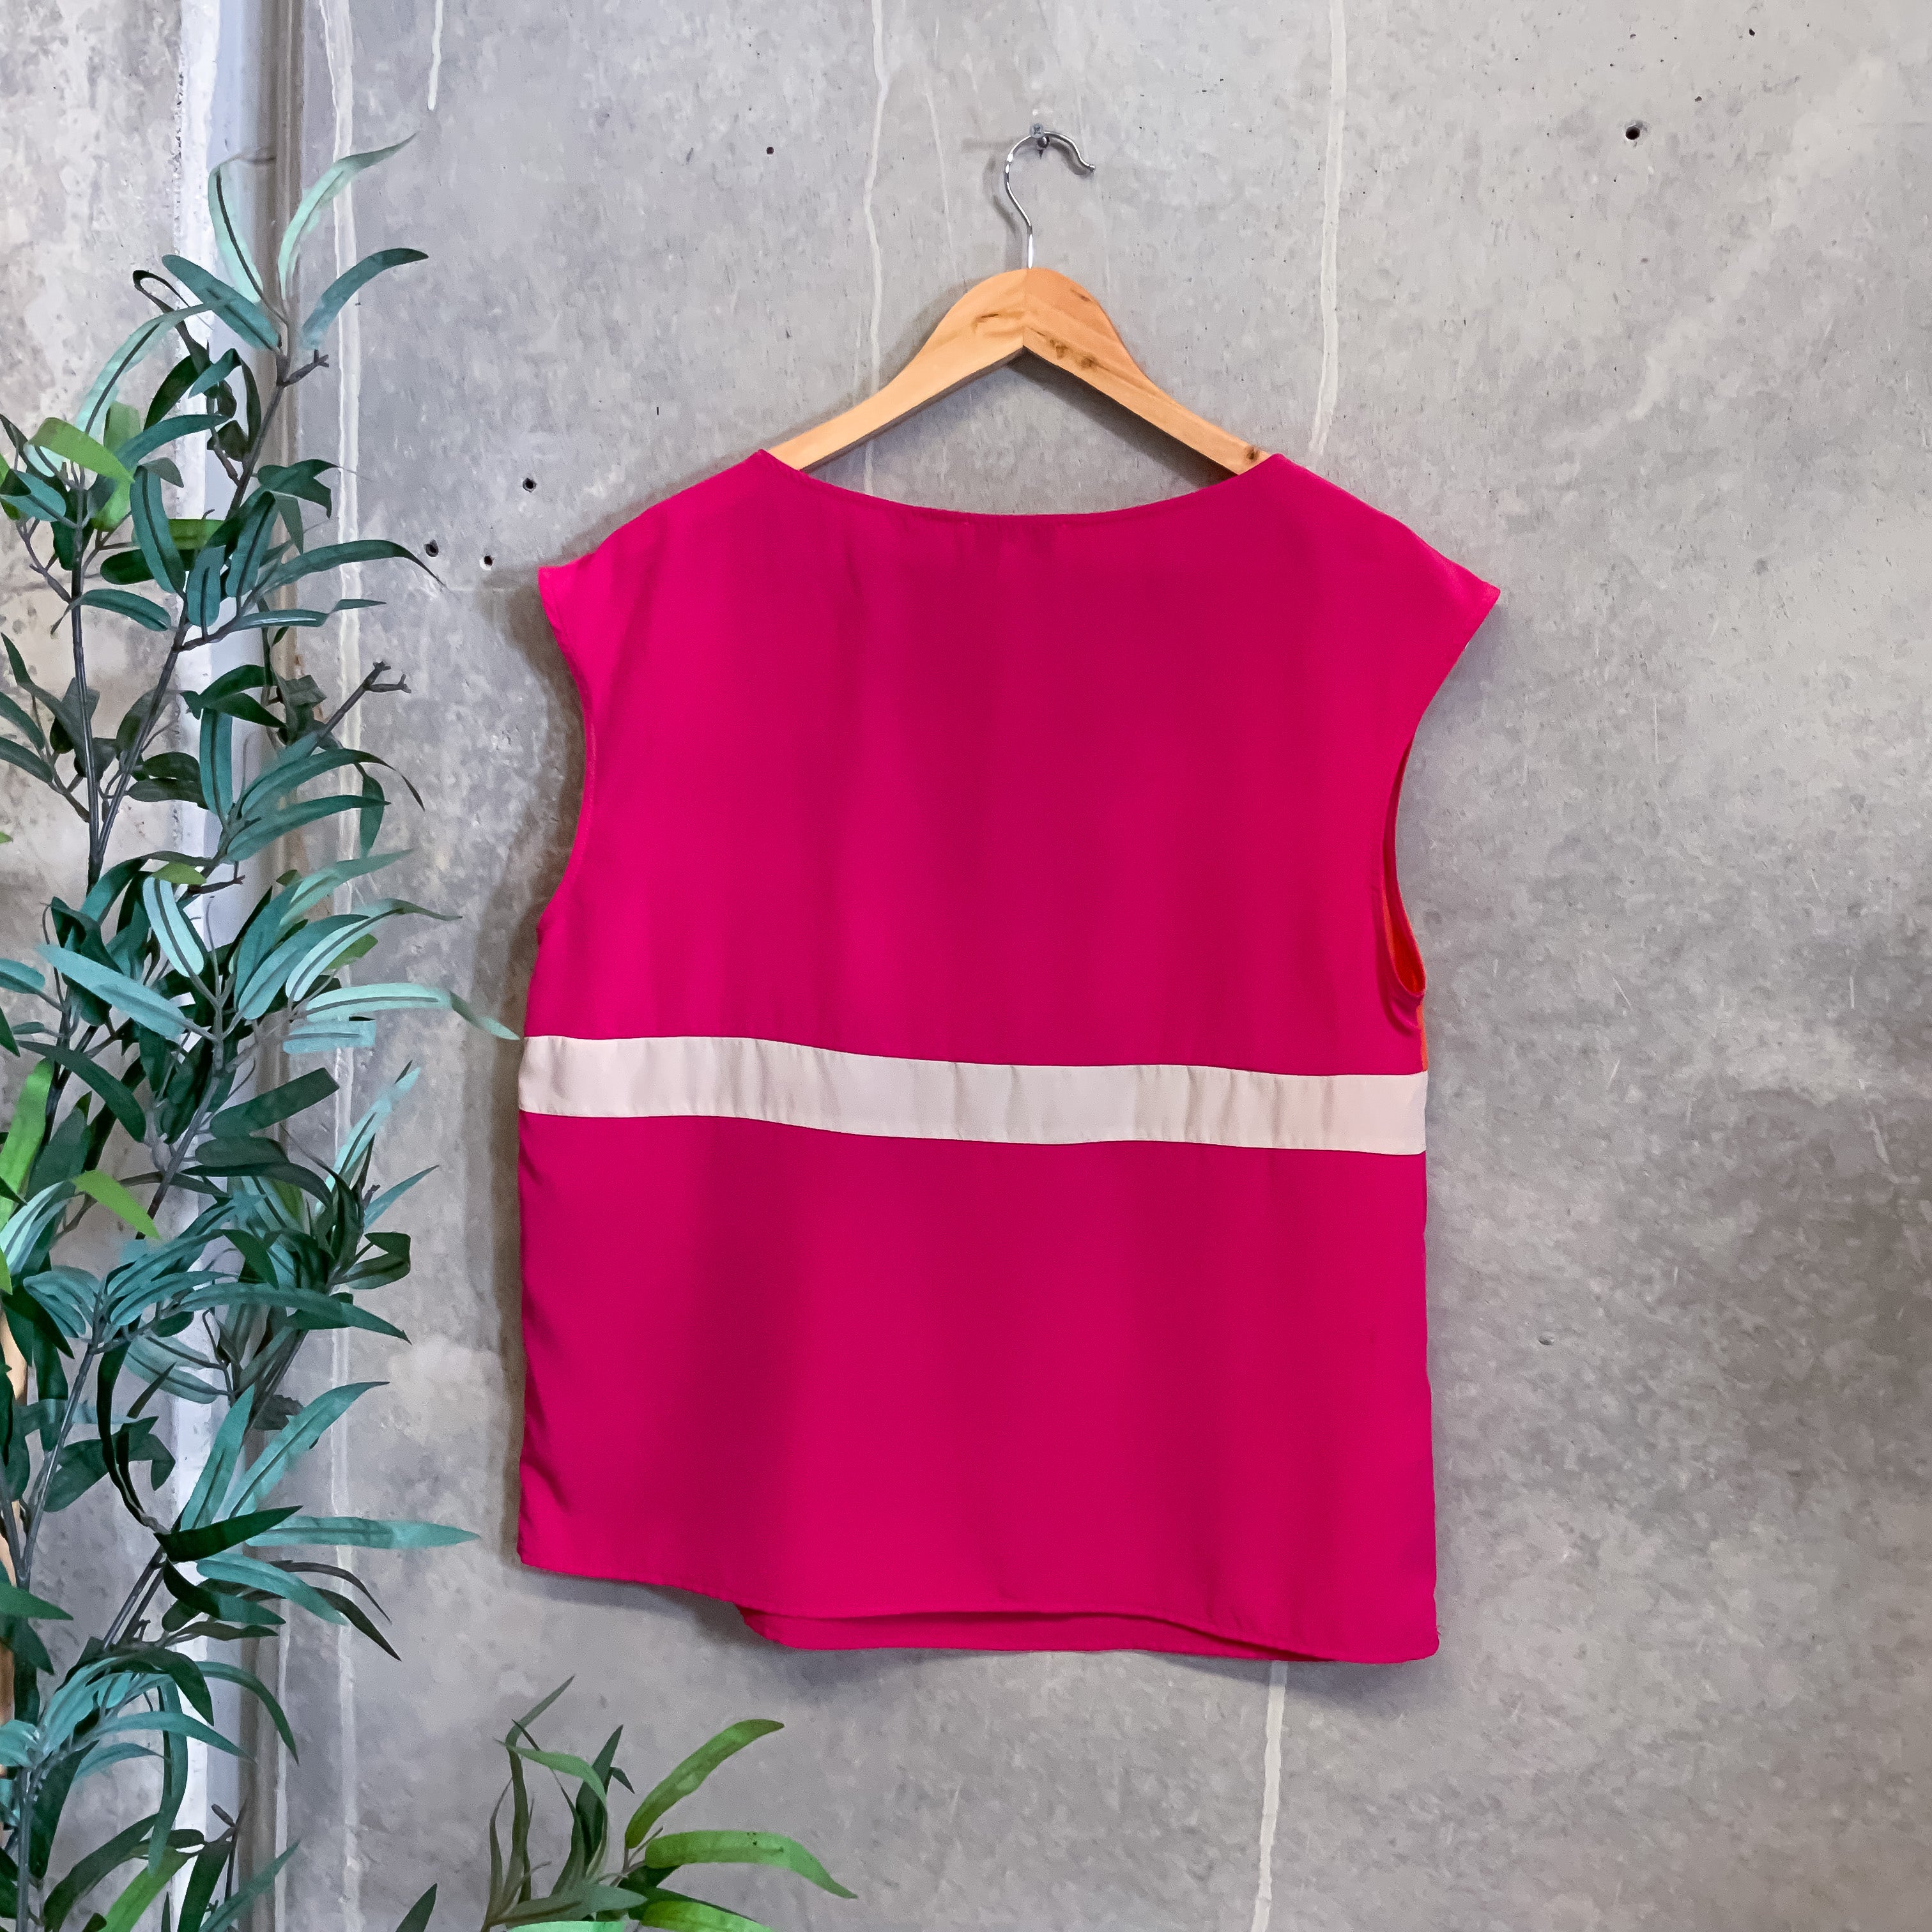 LAURA ASHLEY Orange Pink Colourblock Sleeveless Casual Blouse - Size 16